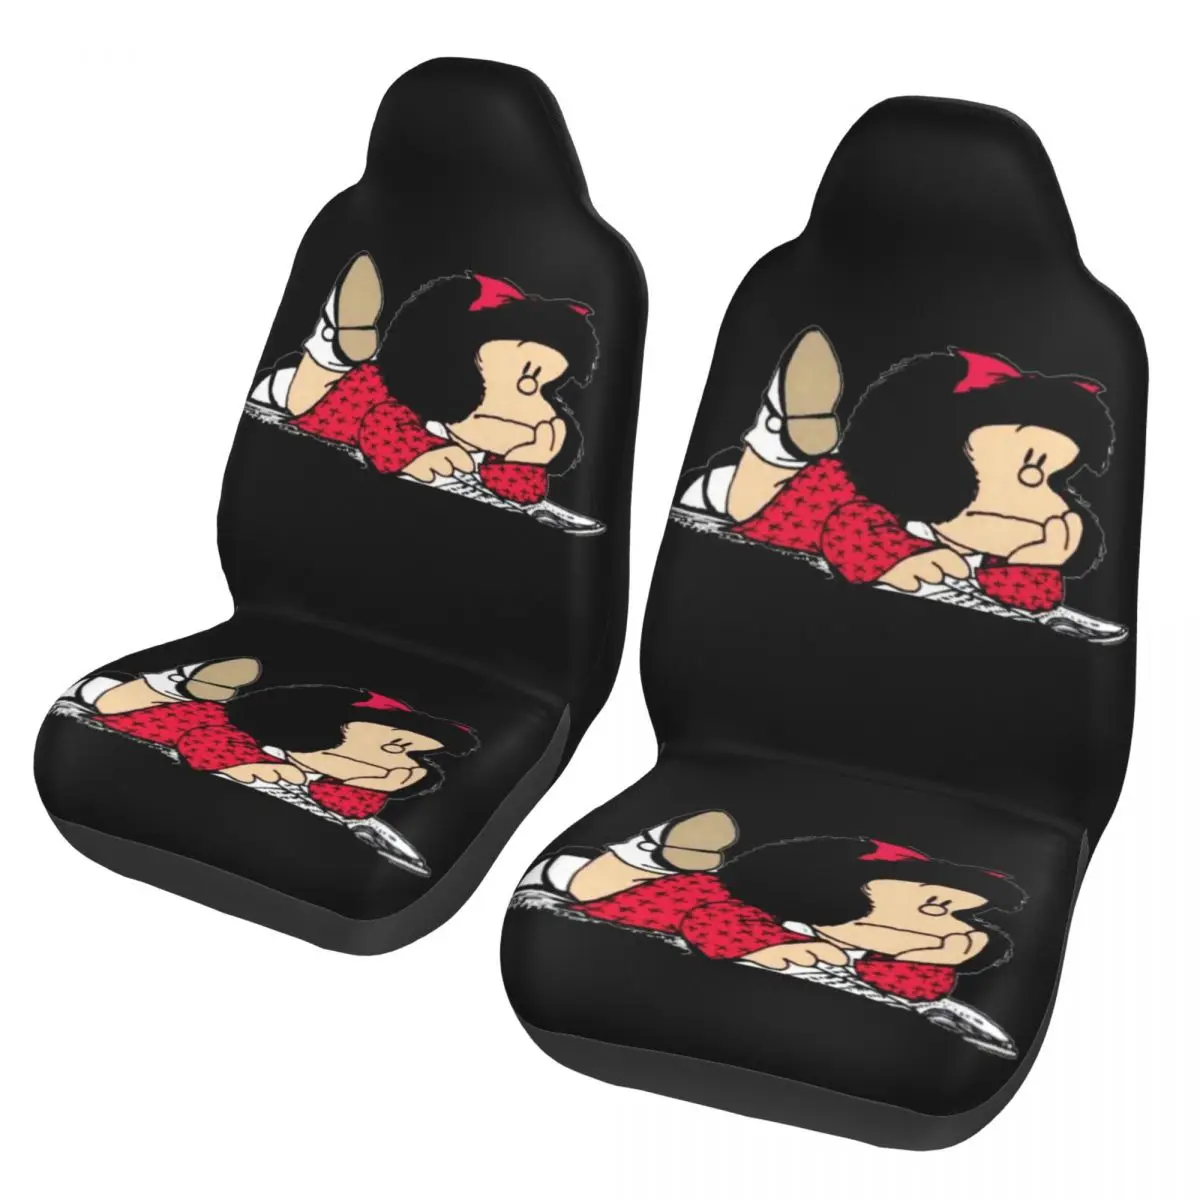 

Mafalda Universal Auto Car Seat Covers Fit Any Truck Van RV SUV Argentine Cartoon Quino Comic Bucket Seat Protector Cover 2 PCS